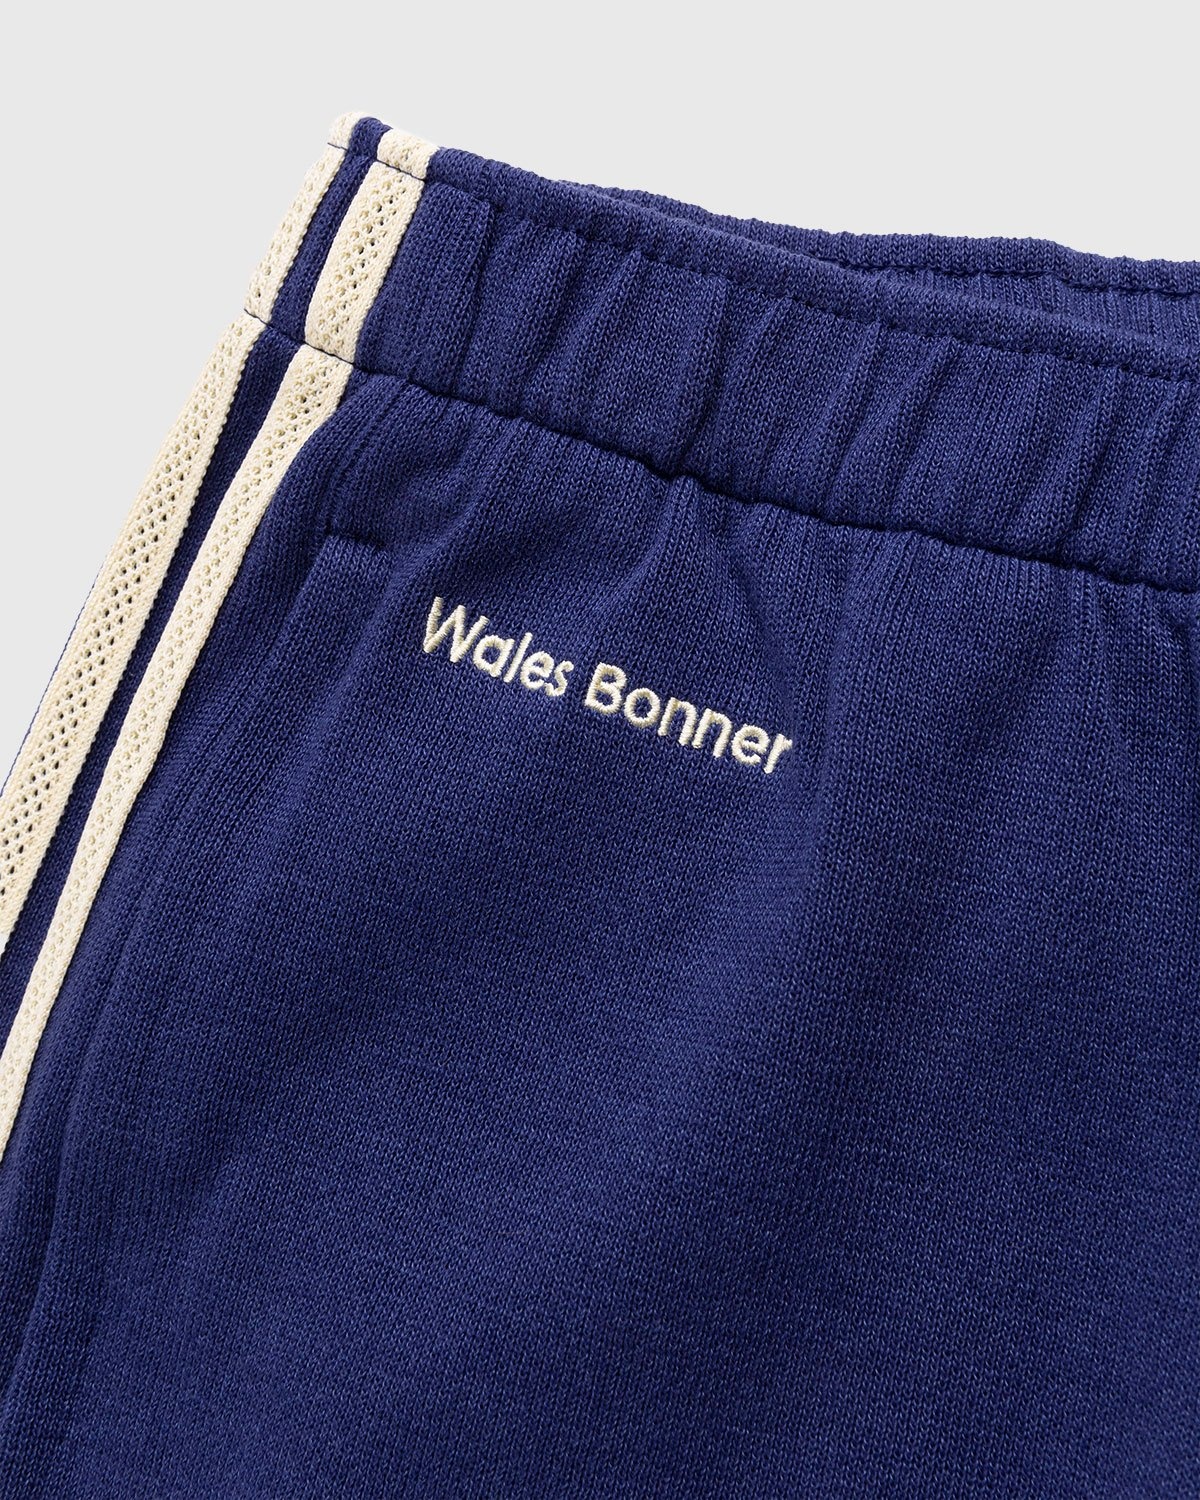 Adidas x Wales Bonner – 80s Track Top Night Sky